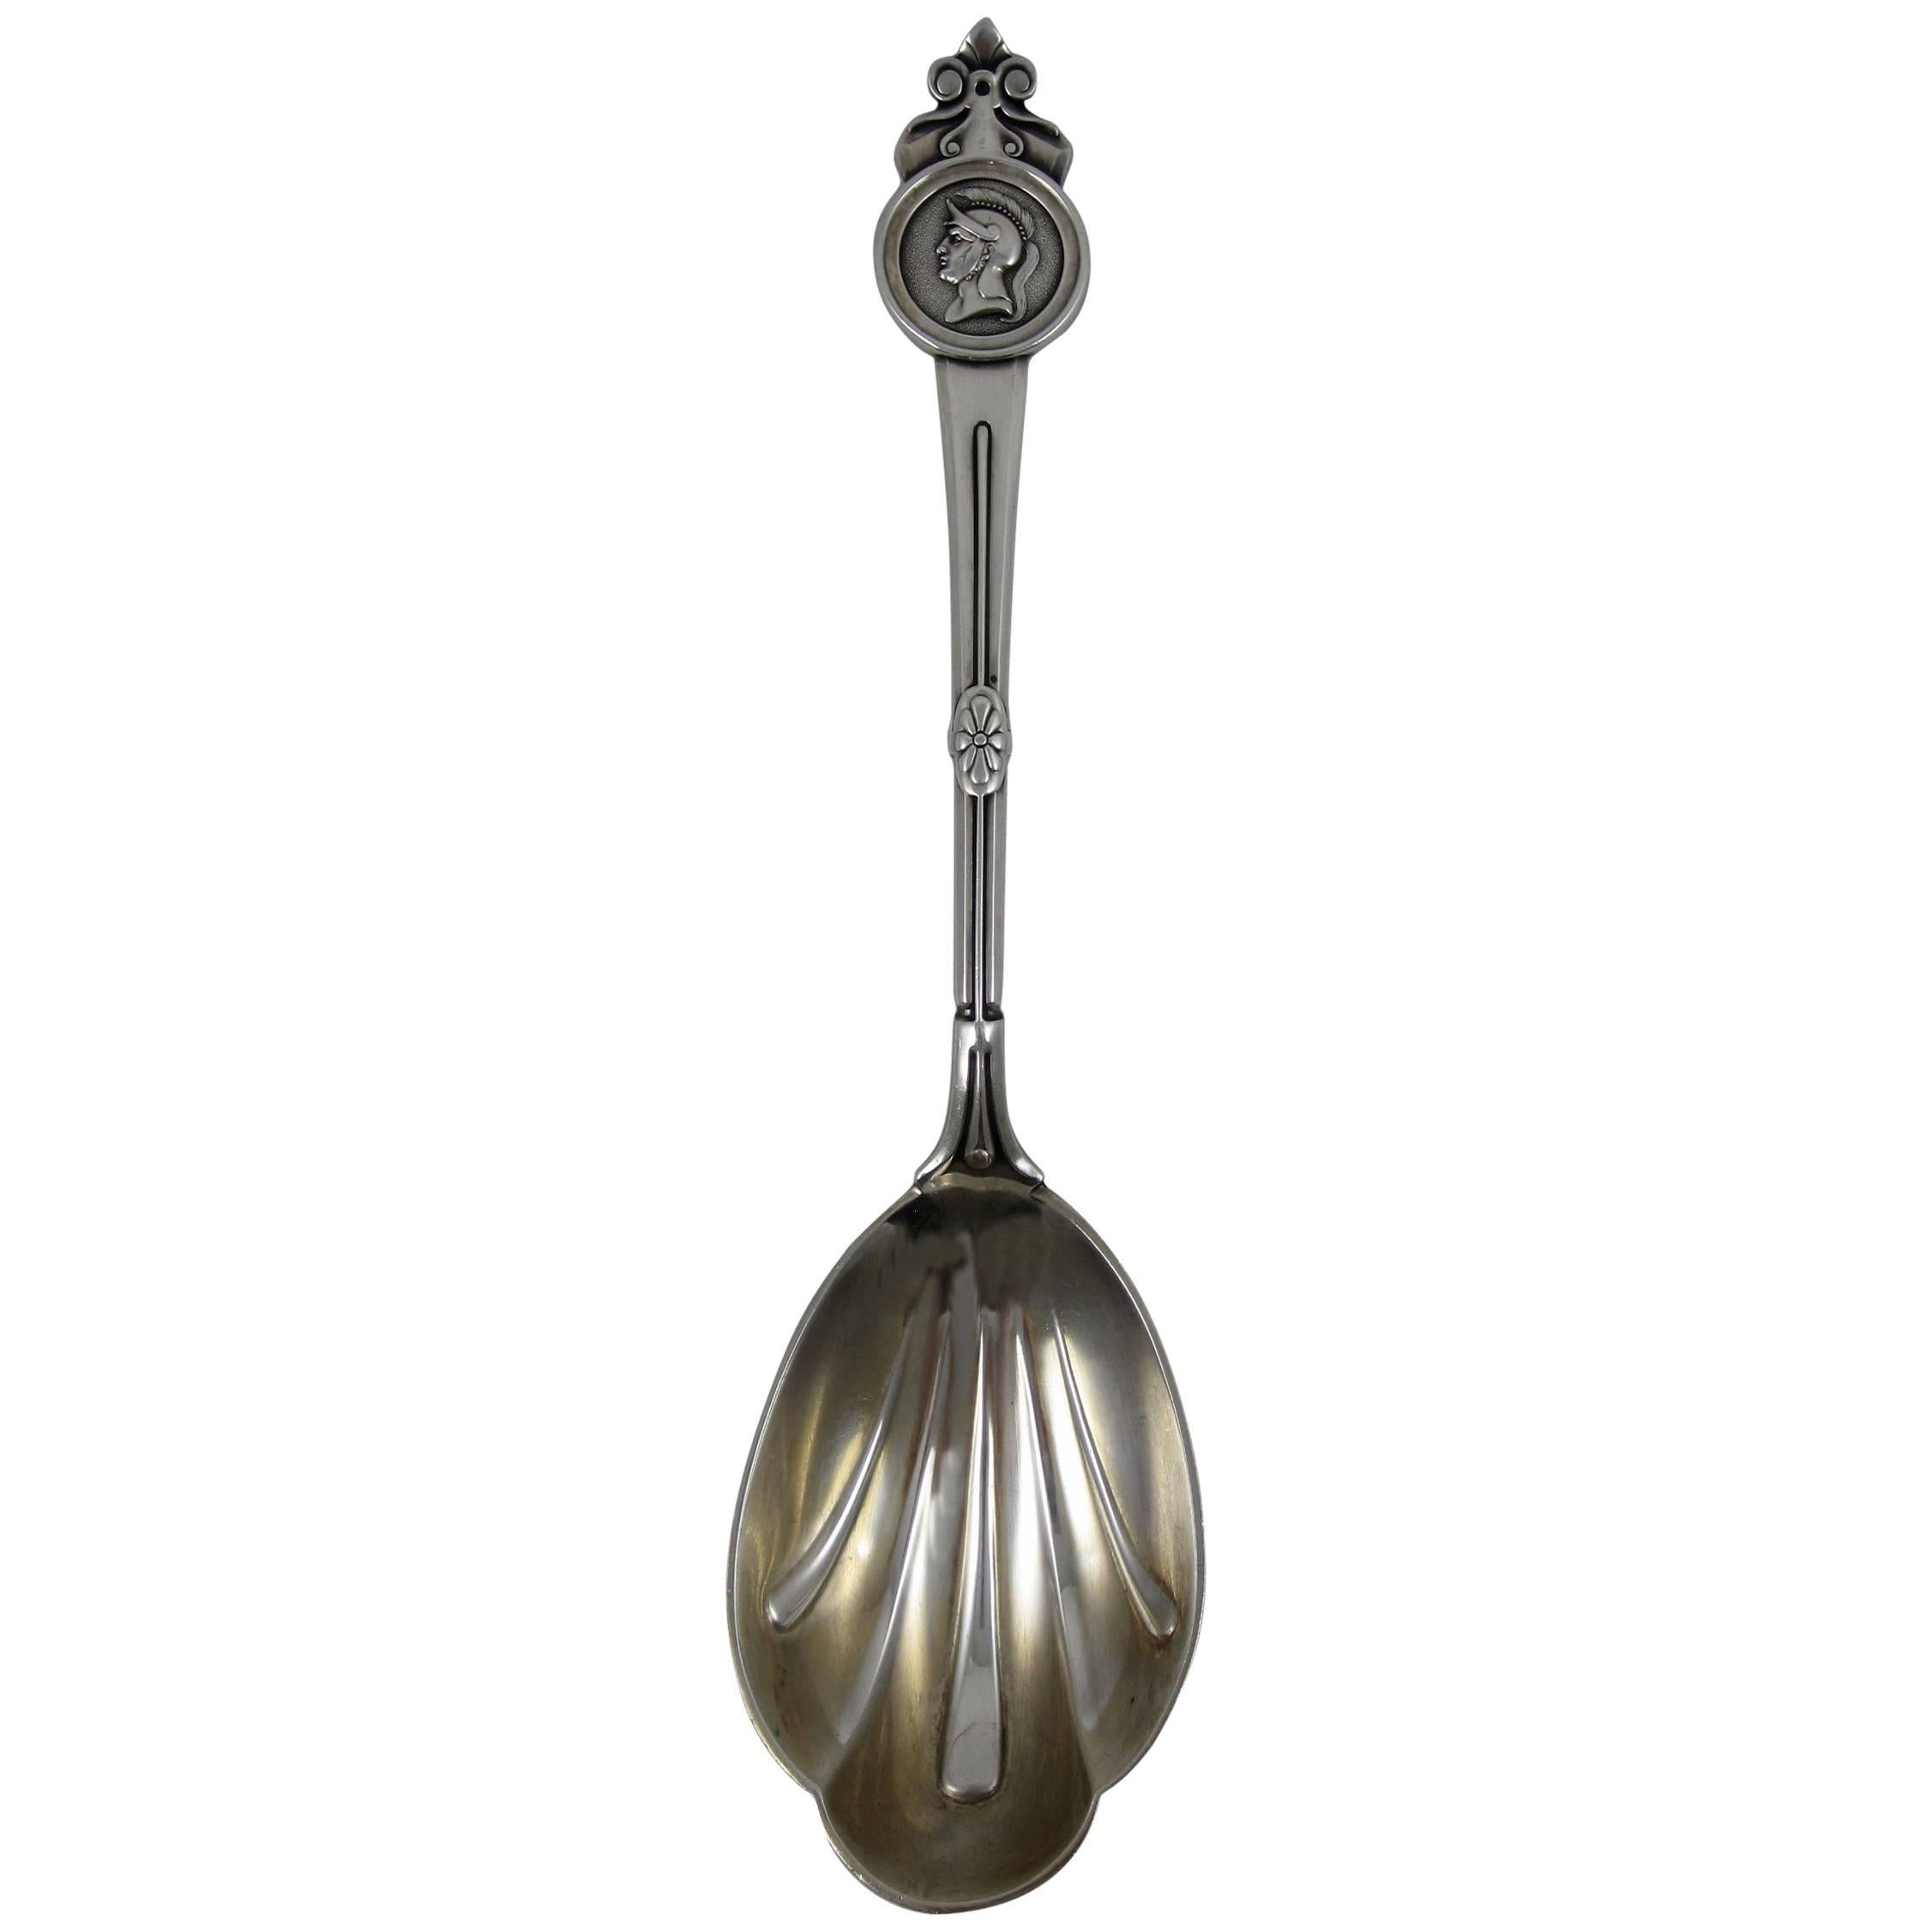 Tiffany & Co. Sterling Silver Gorham Armorial Medallion Serving Spoon circa 1864